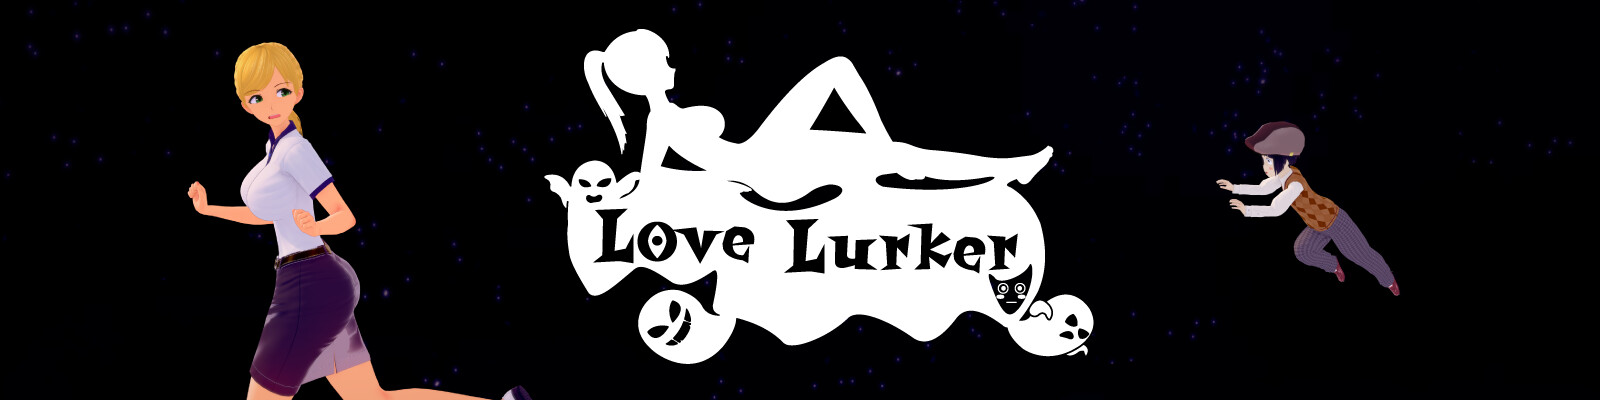 Love Lurker Main Image